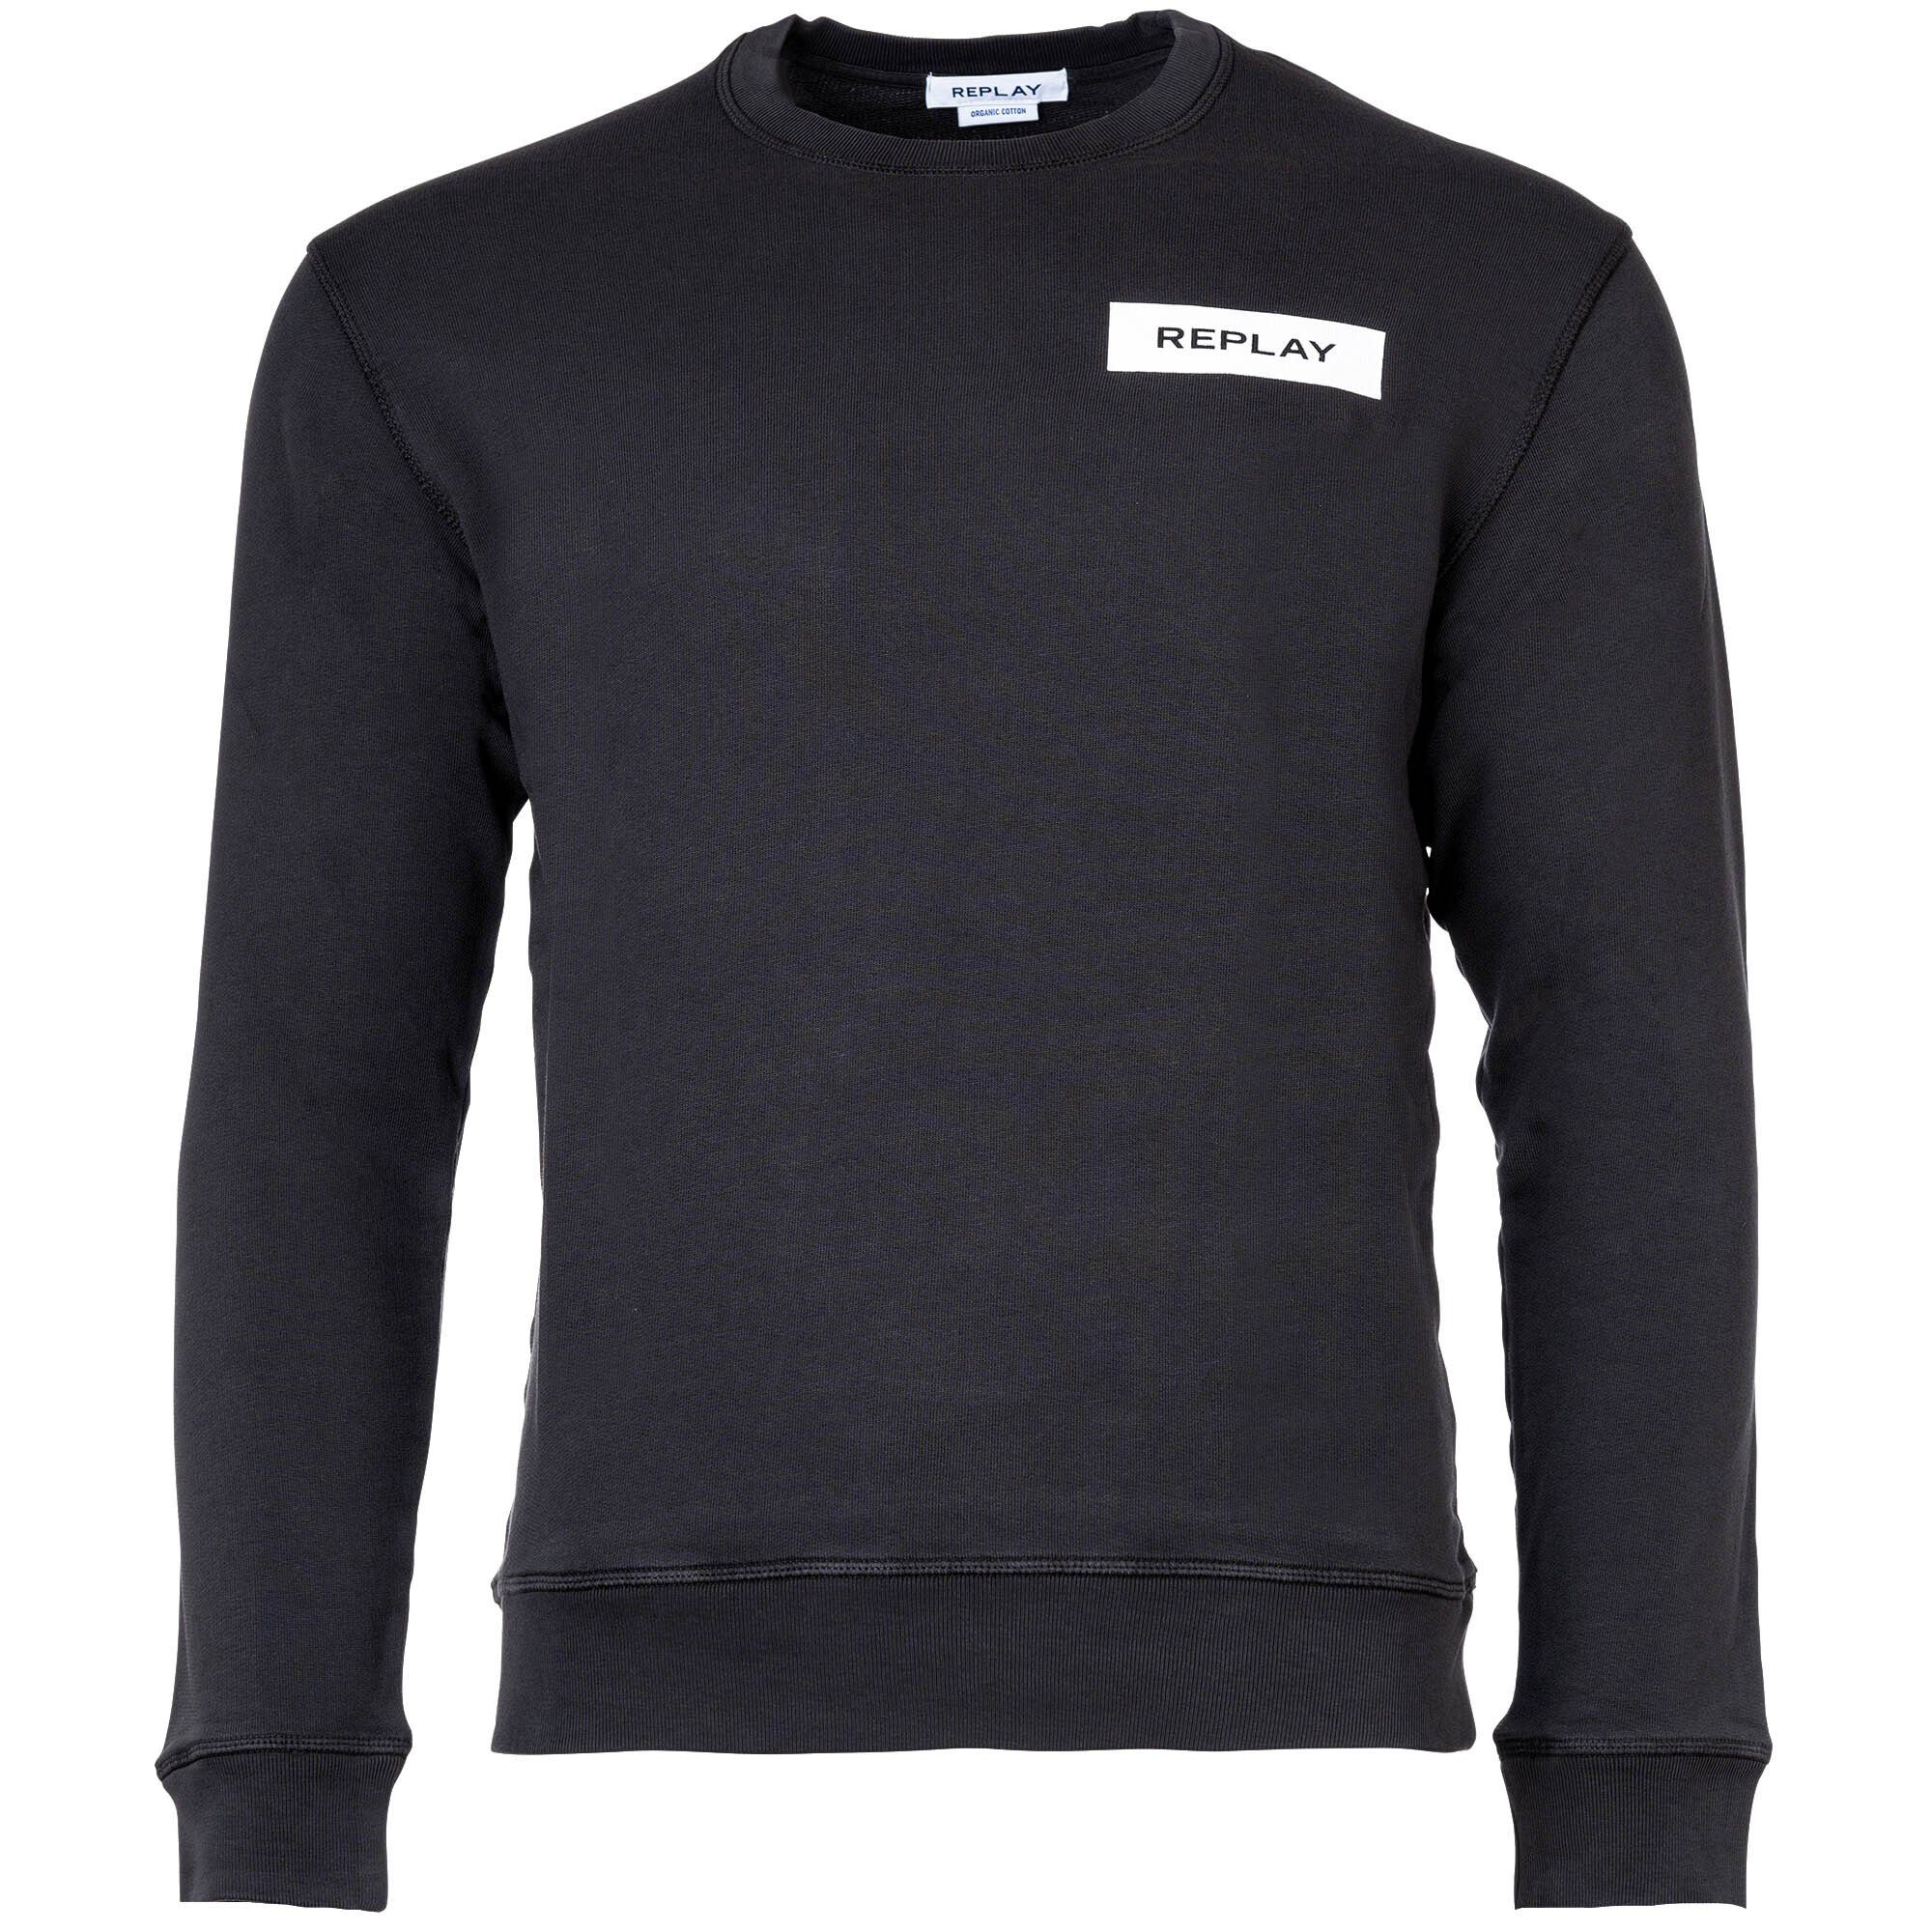 Replay Sweatshirt Herren Sweater, Organic Schwarz Sweatshirt Rundhals, 